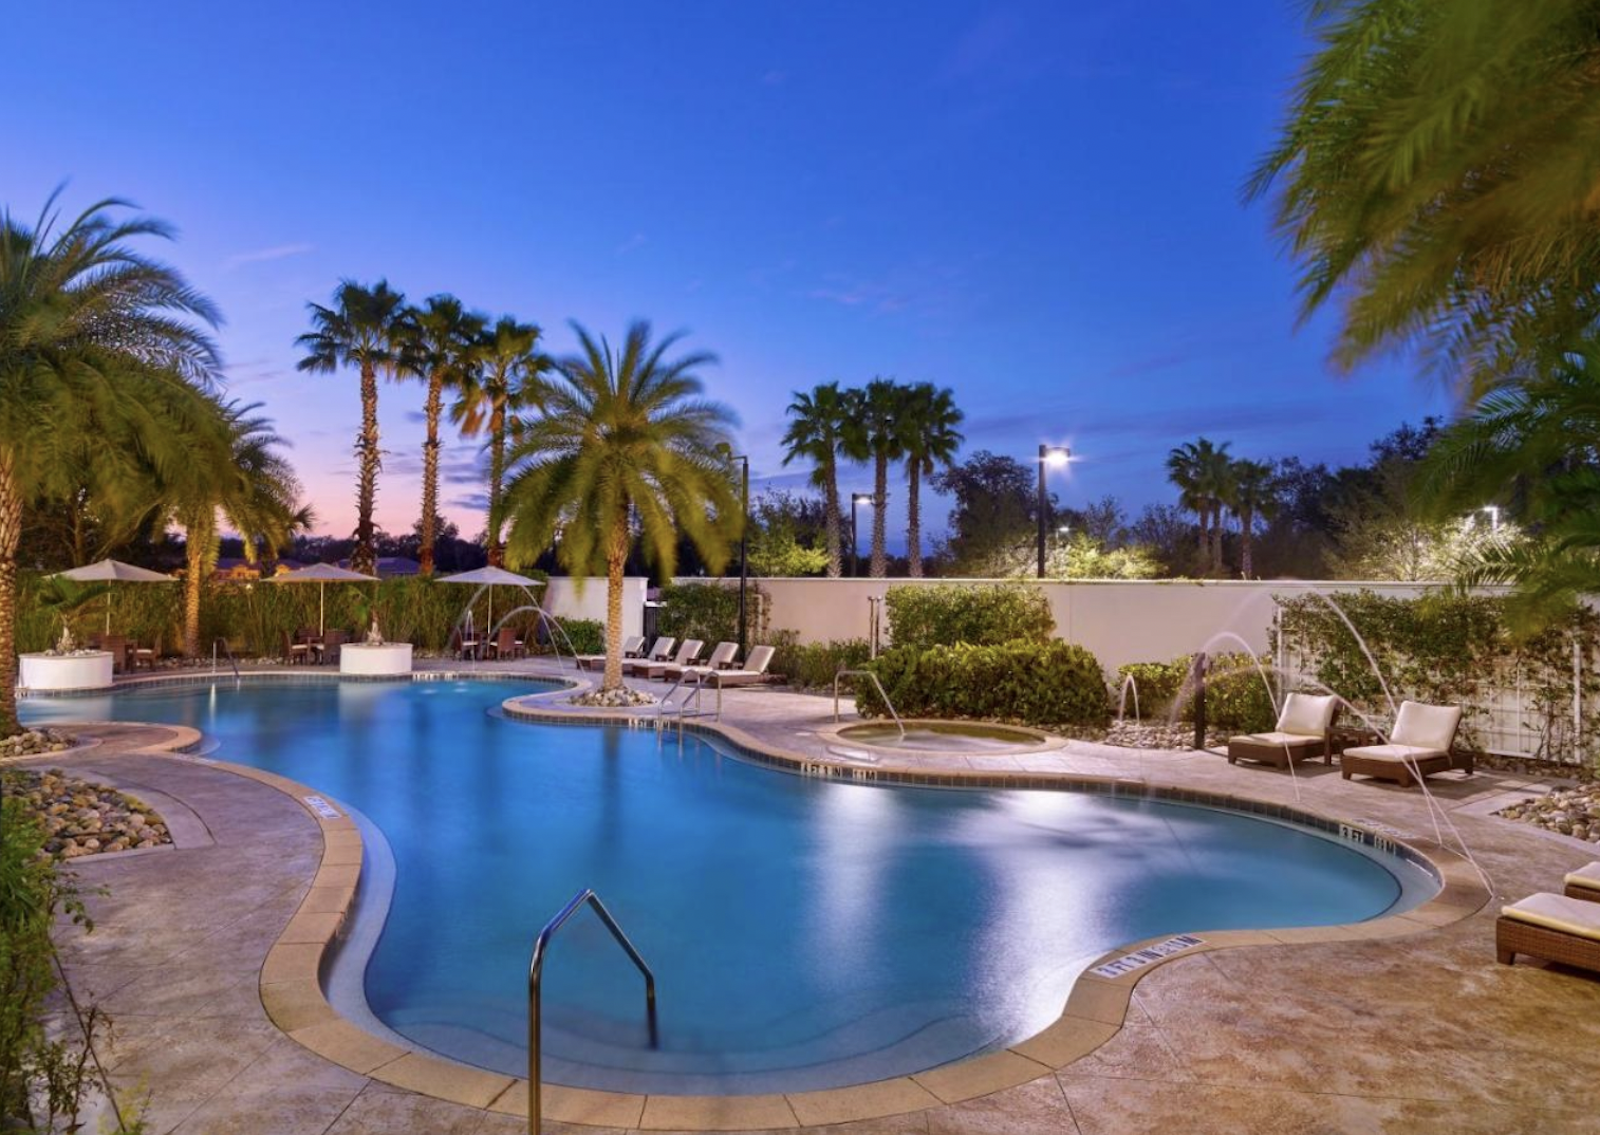 Orlando hotels - westin pool